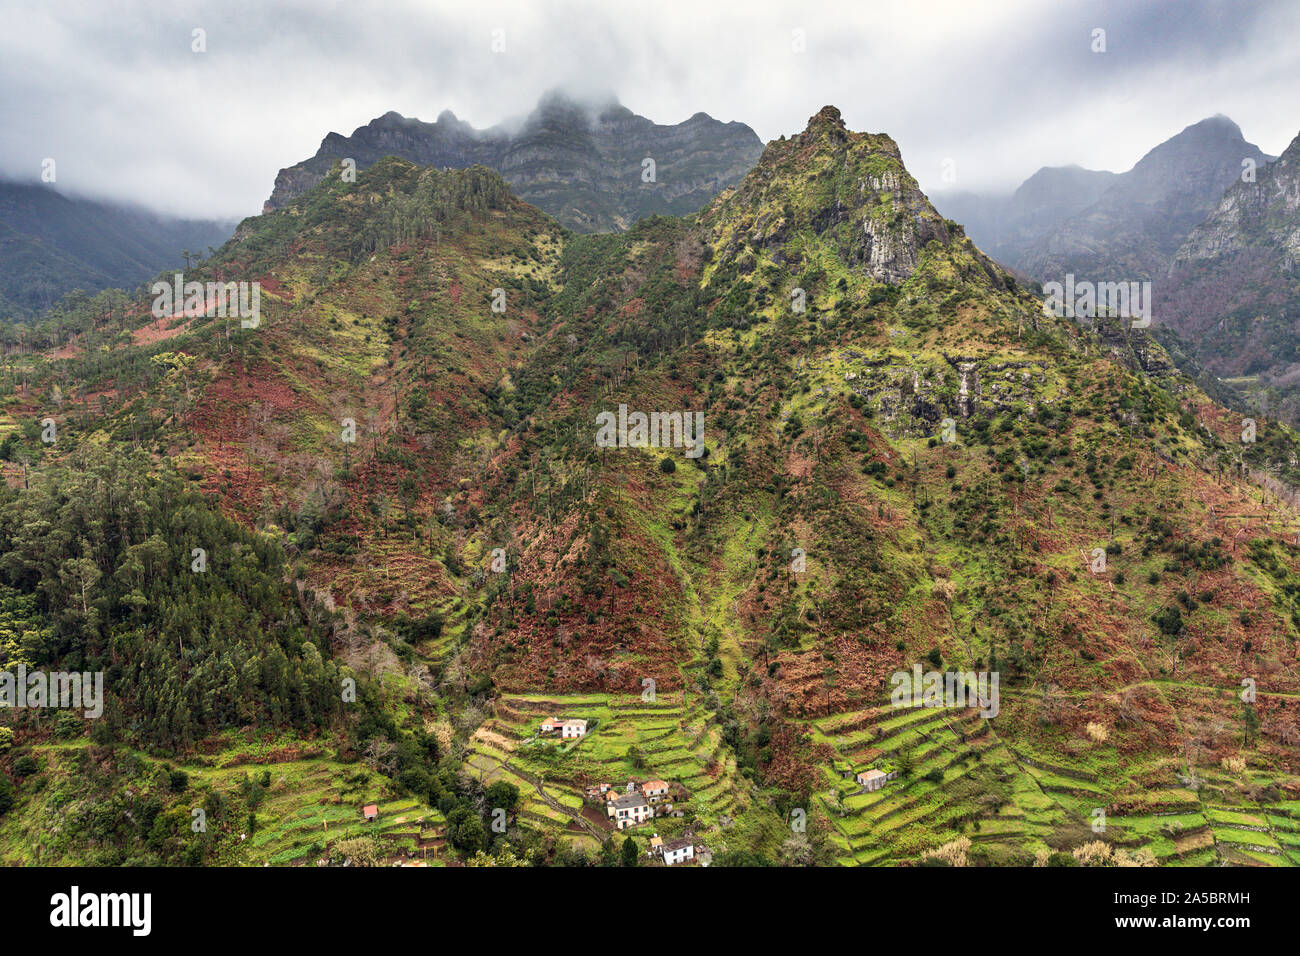 View over Valley near Serra de Agua, Madeira, Portugal Stock Photo